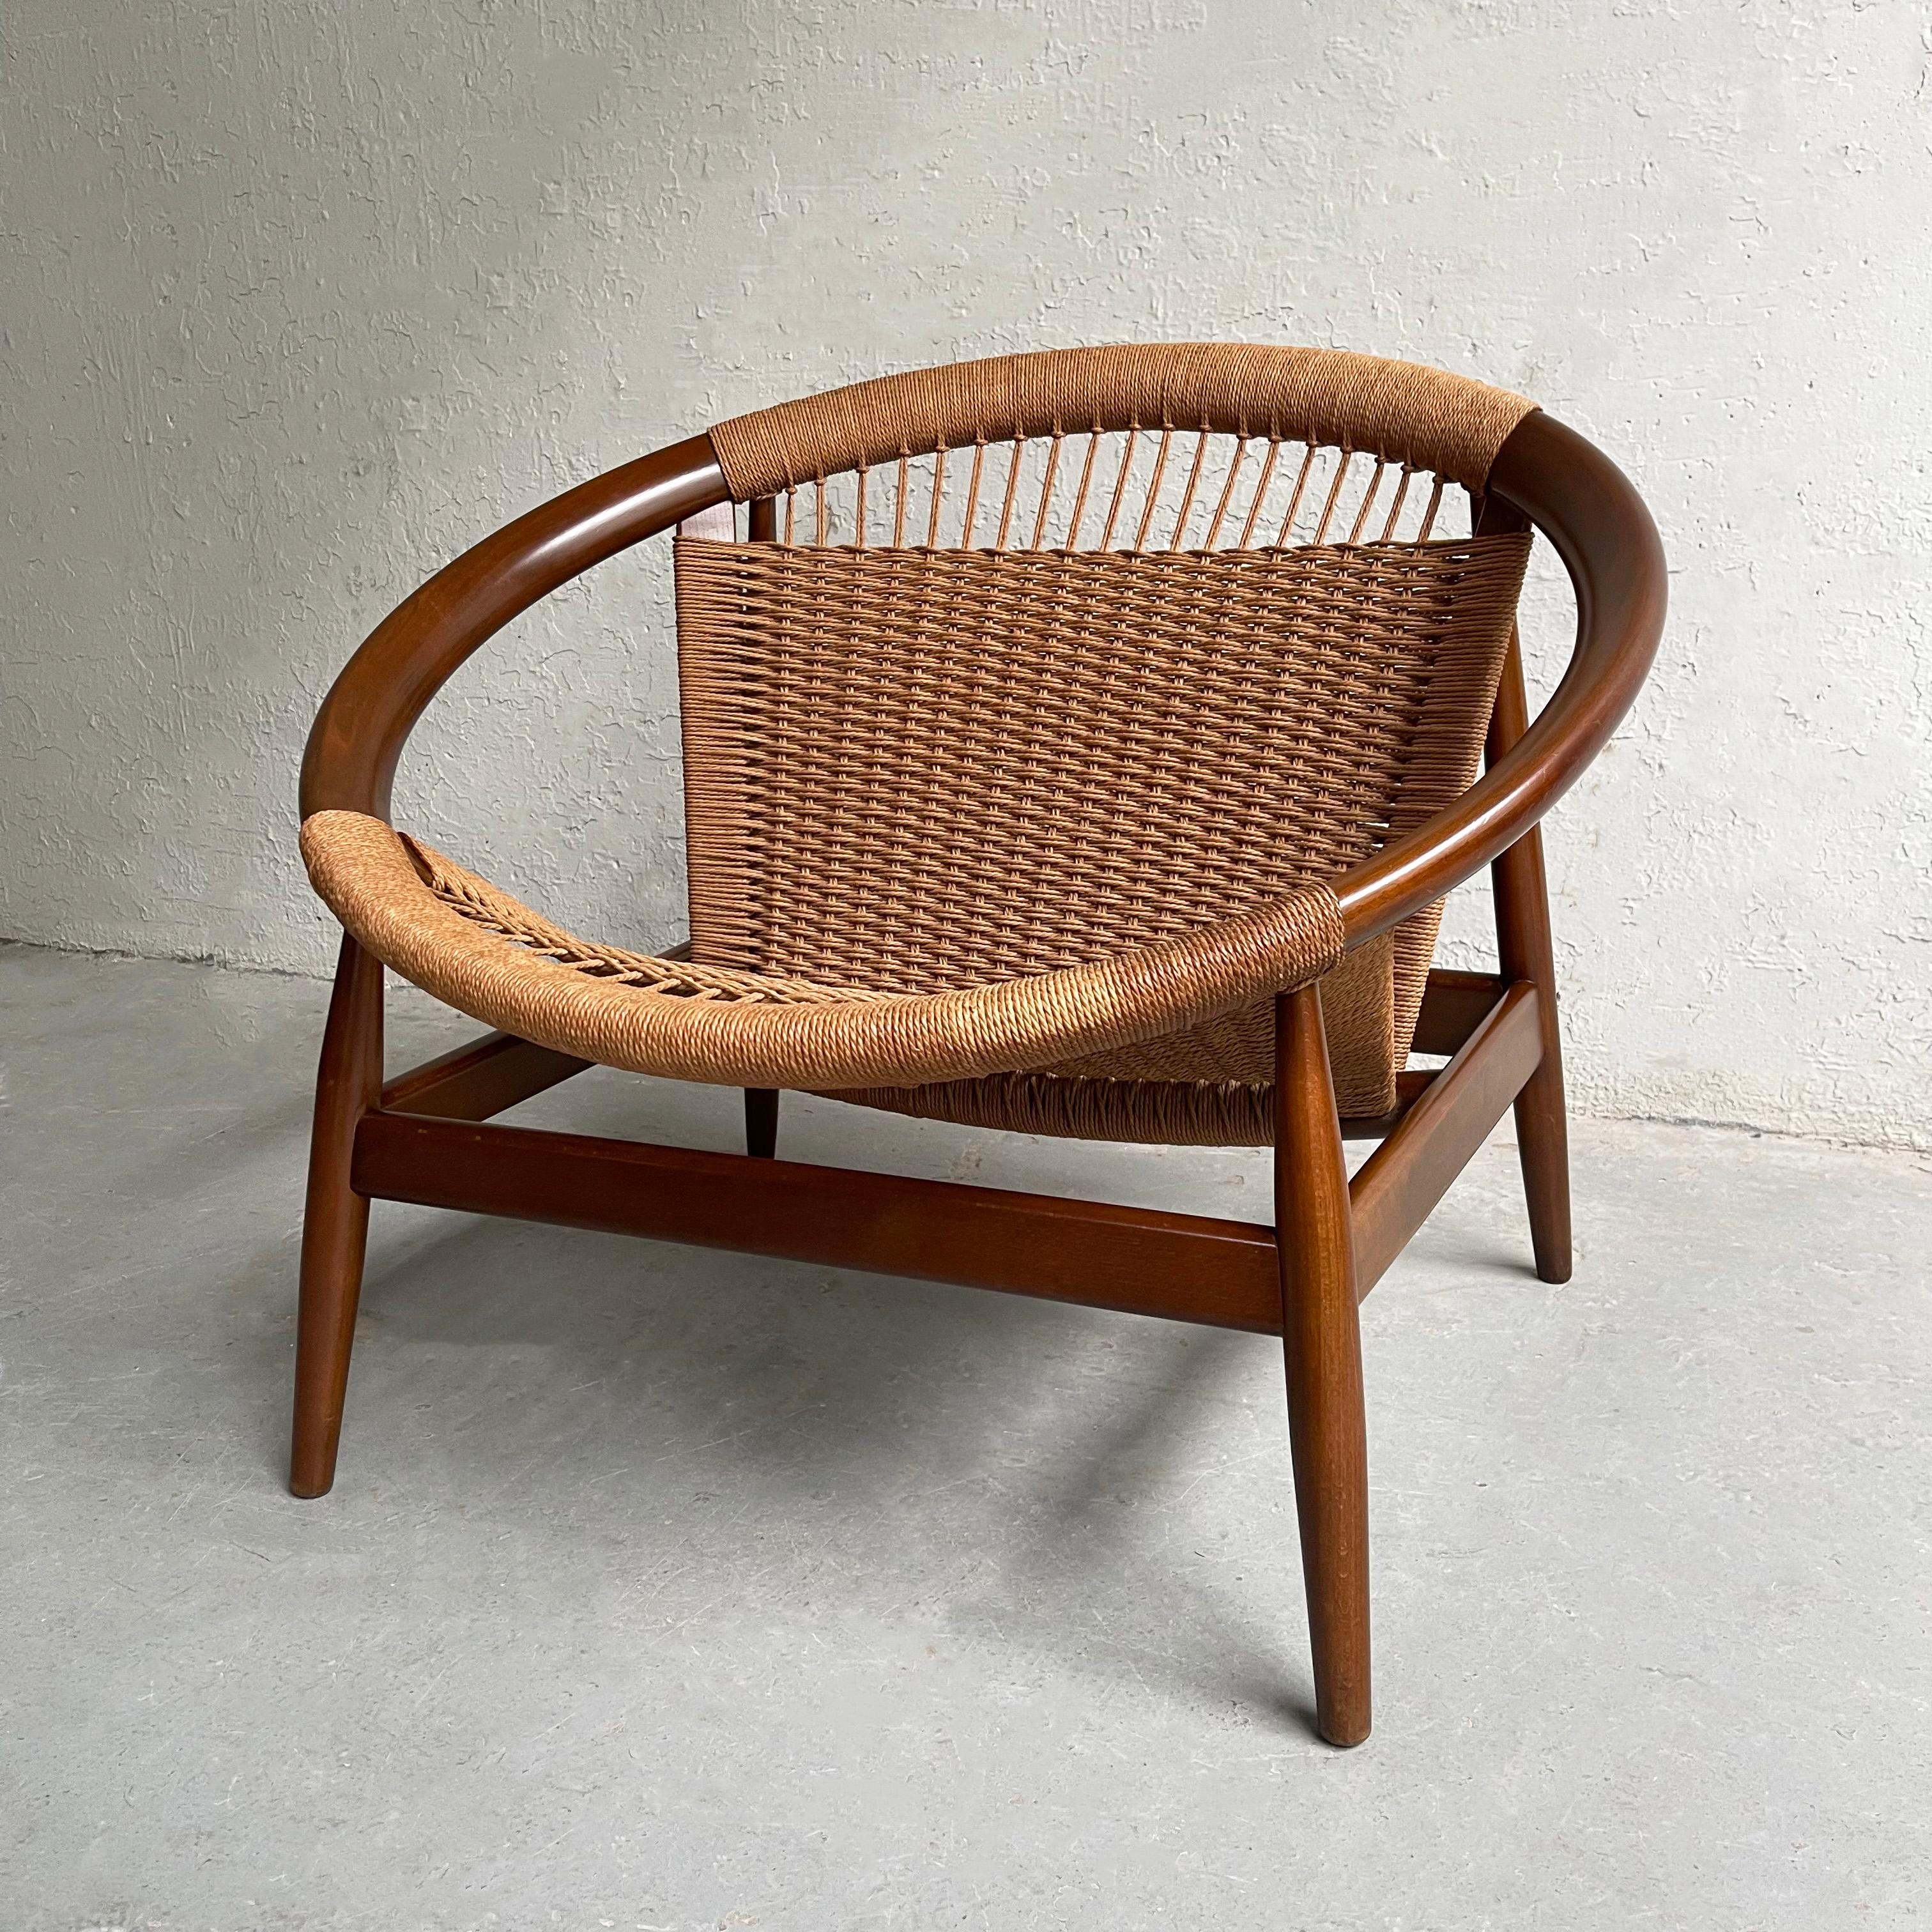 Danish Scandinavian Modern Ringstol Woven Hoop Chair by Illum Wikkelsø